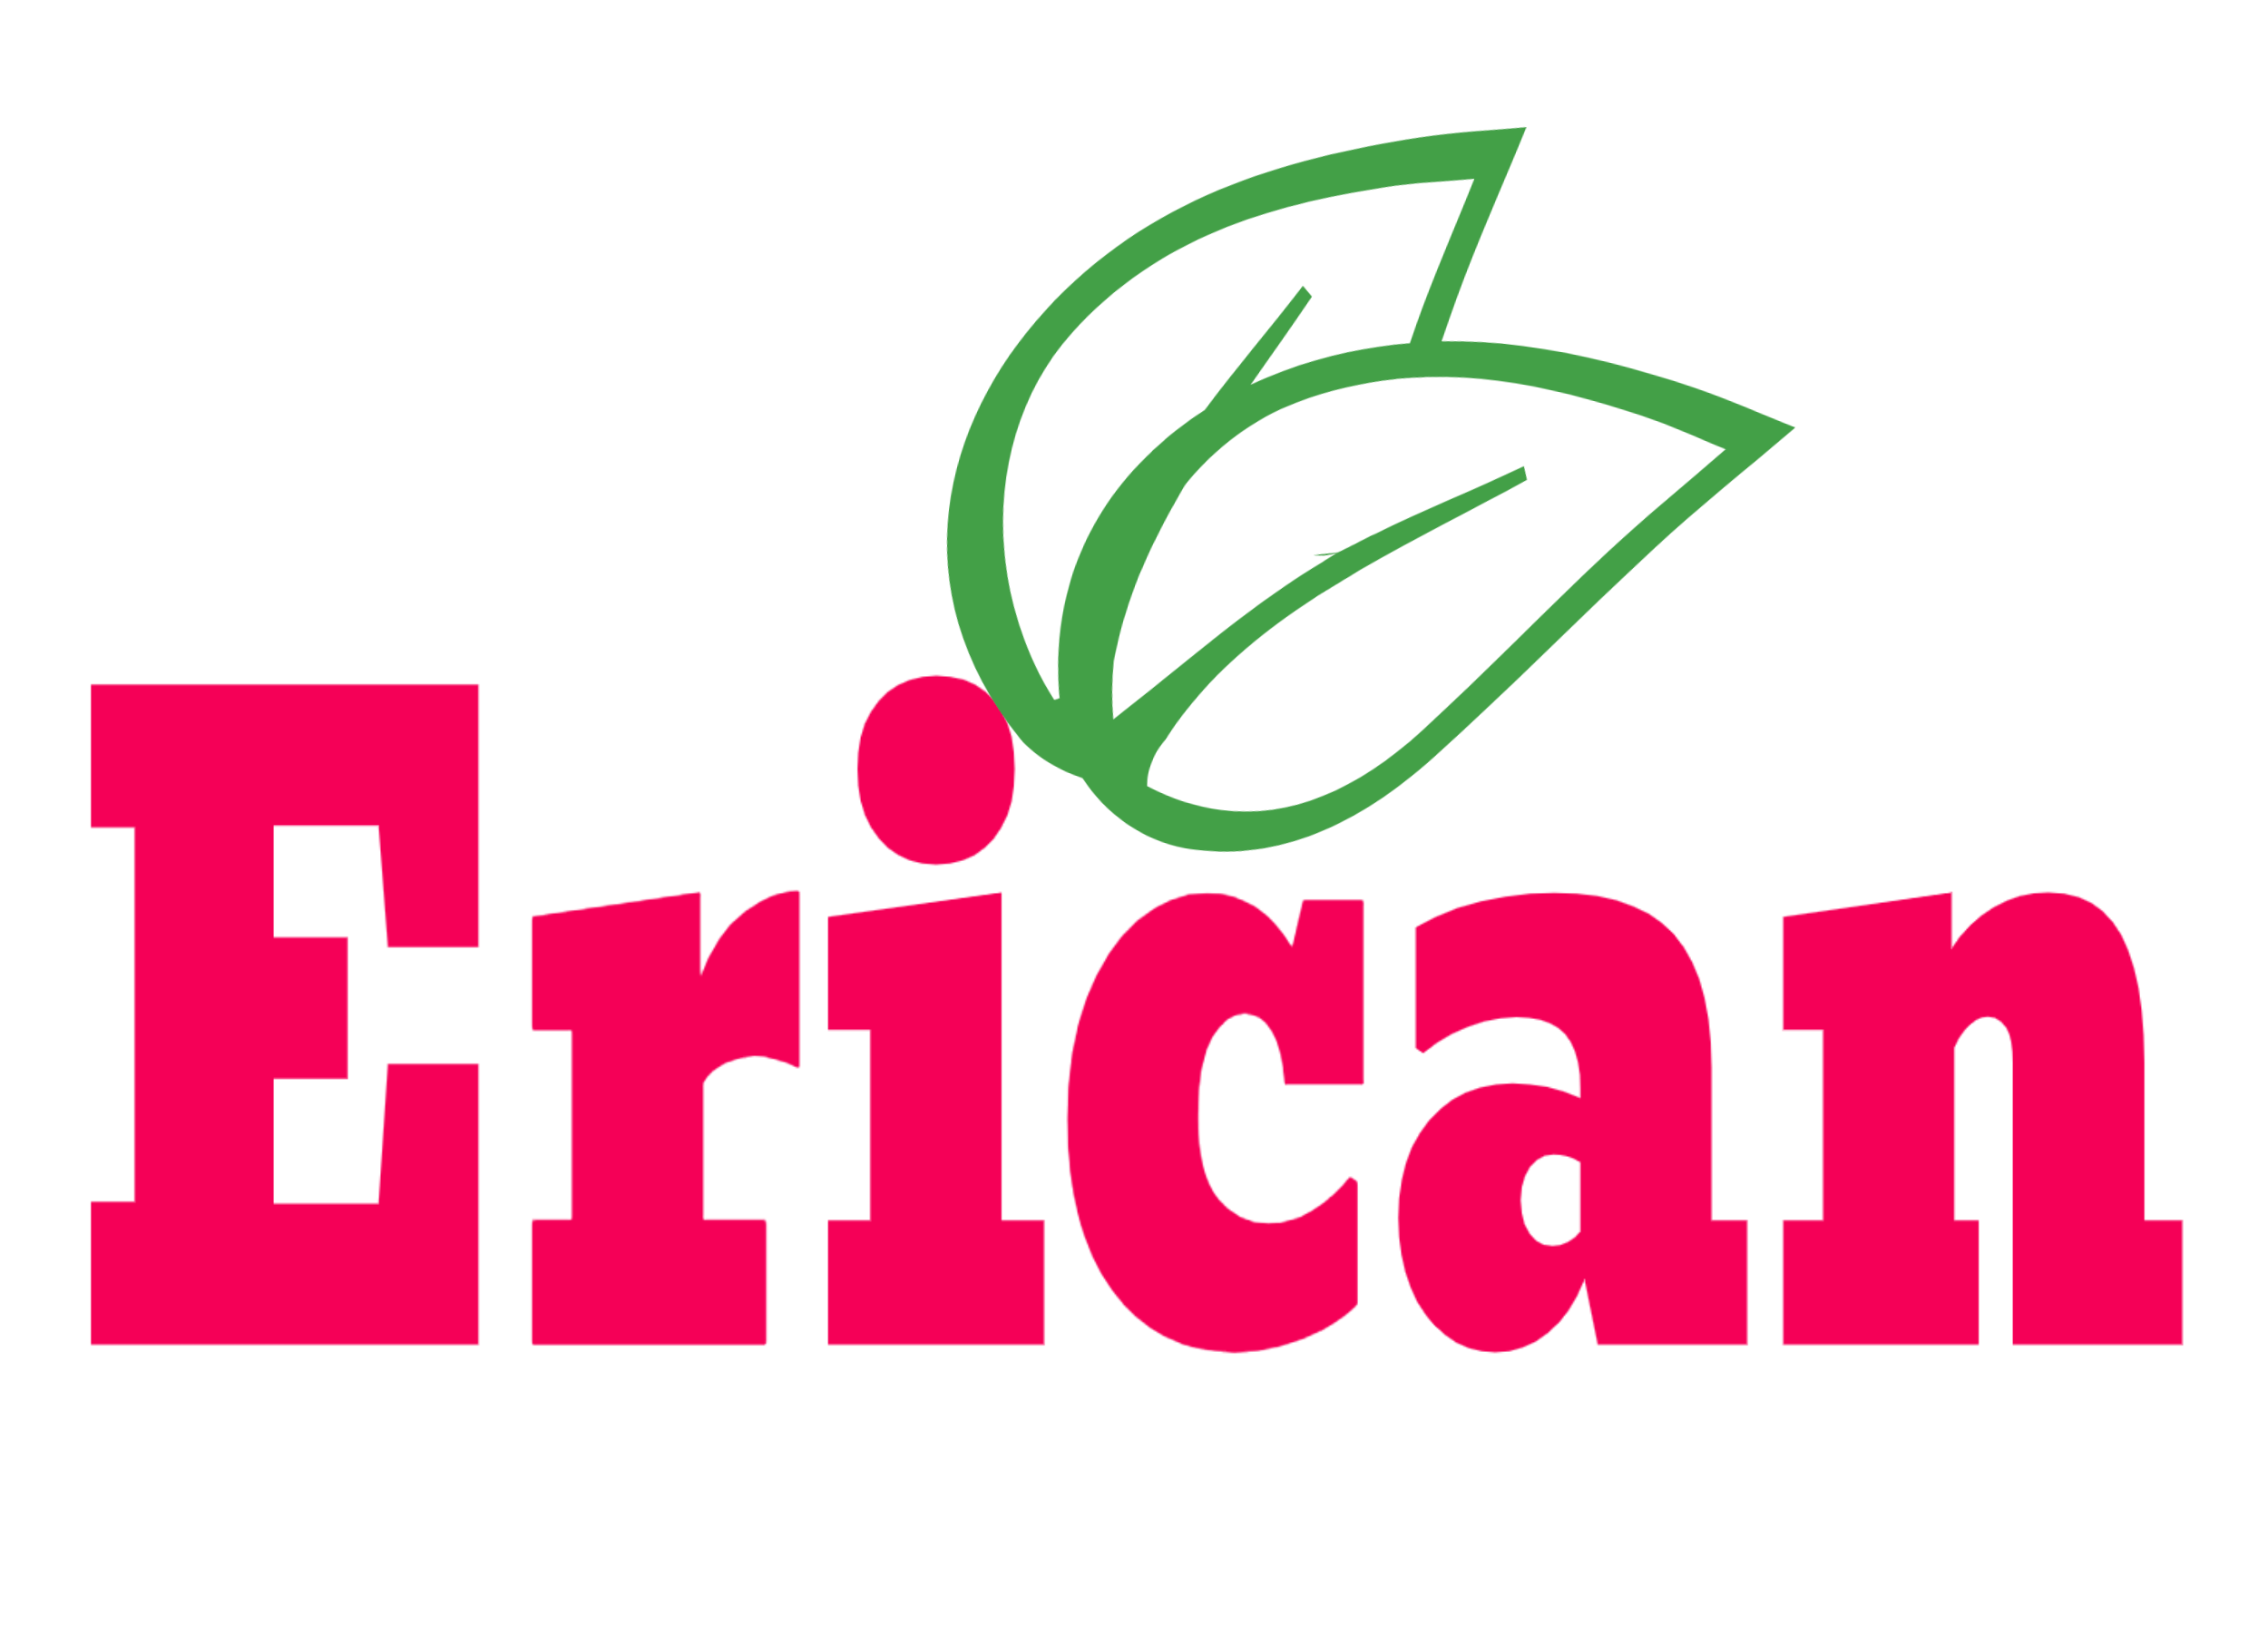 Erican.net